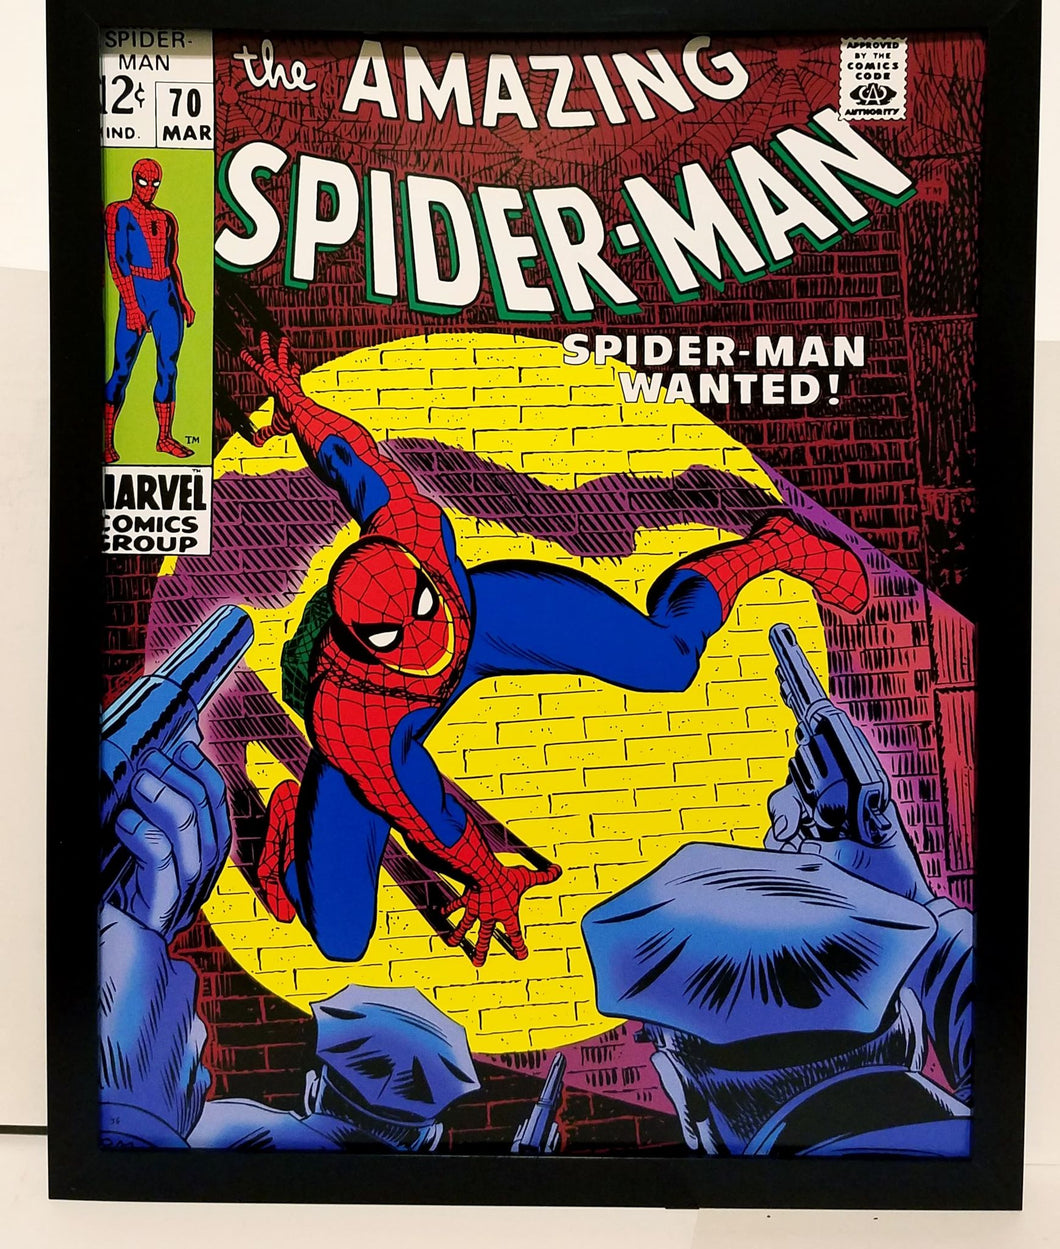 Amazing Spider-Man #70 by John Romita 11x14 FRAMED Marvel Comics Art Print Poster